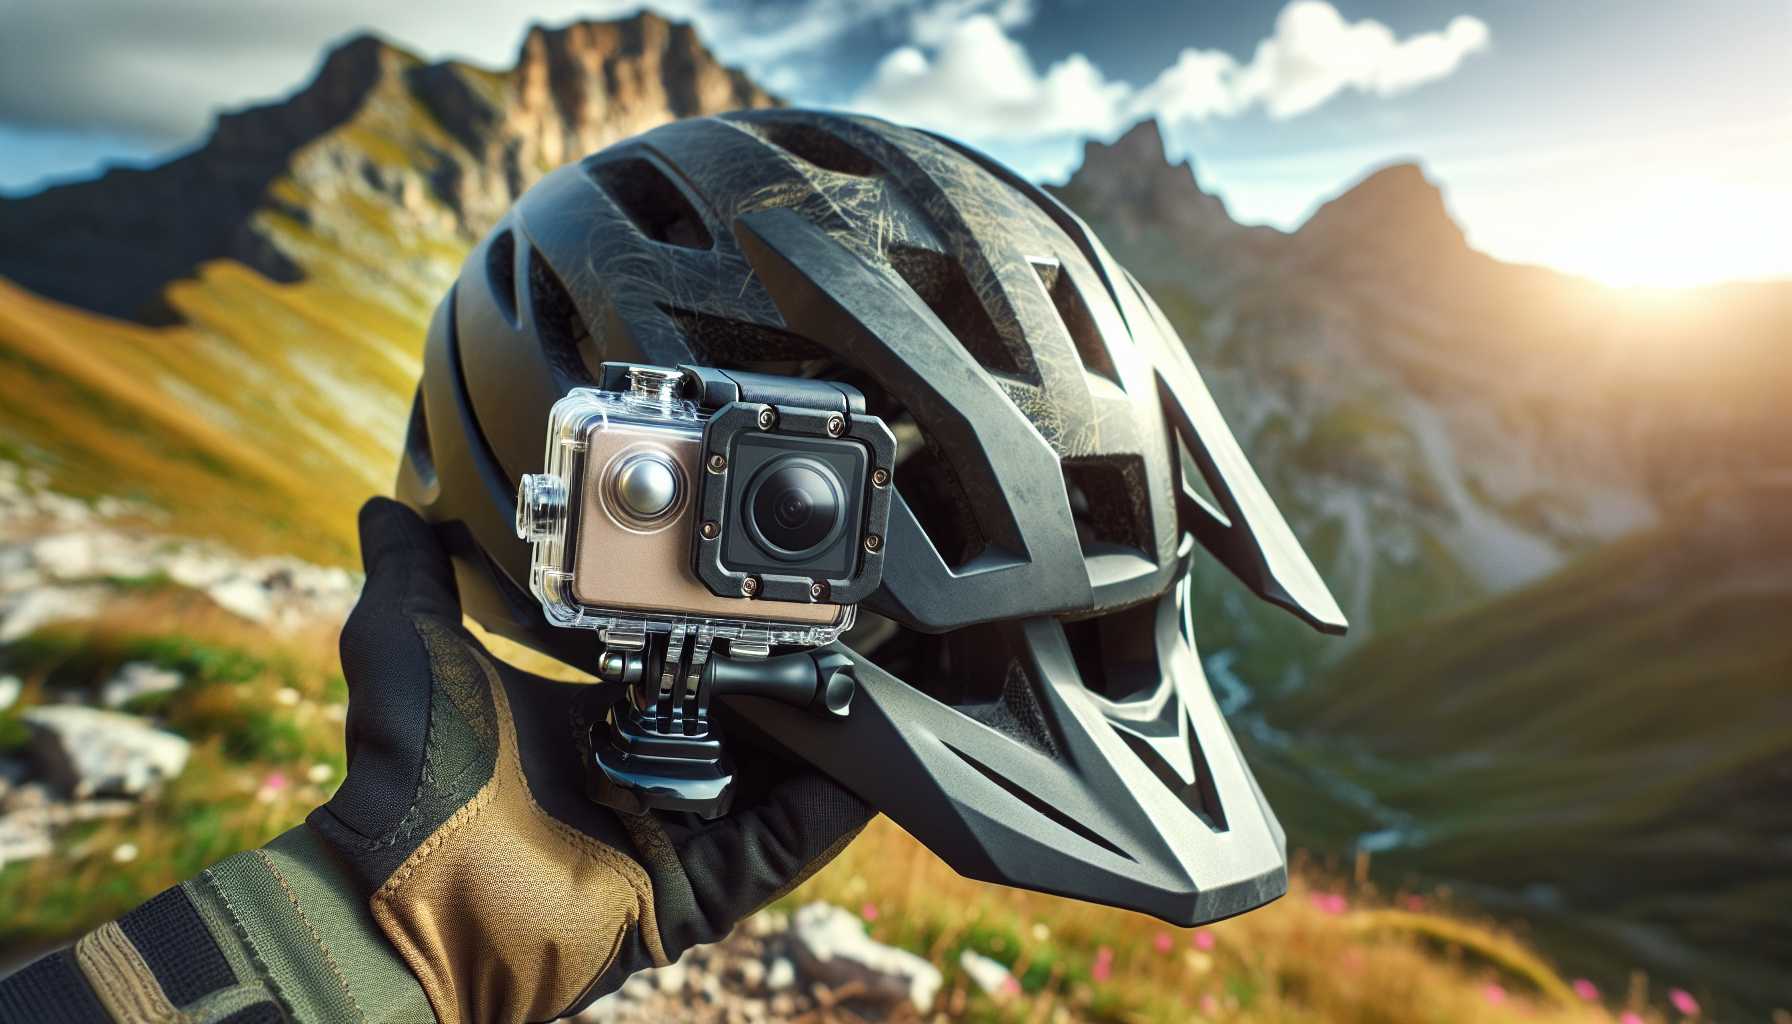 rugged action camera on a mountain biking helmet